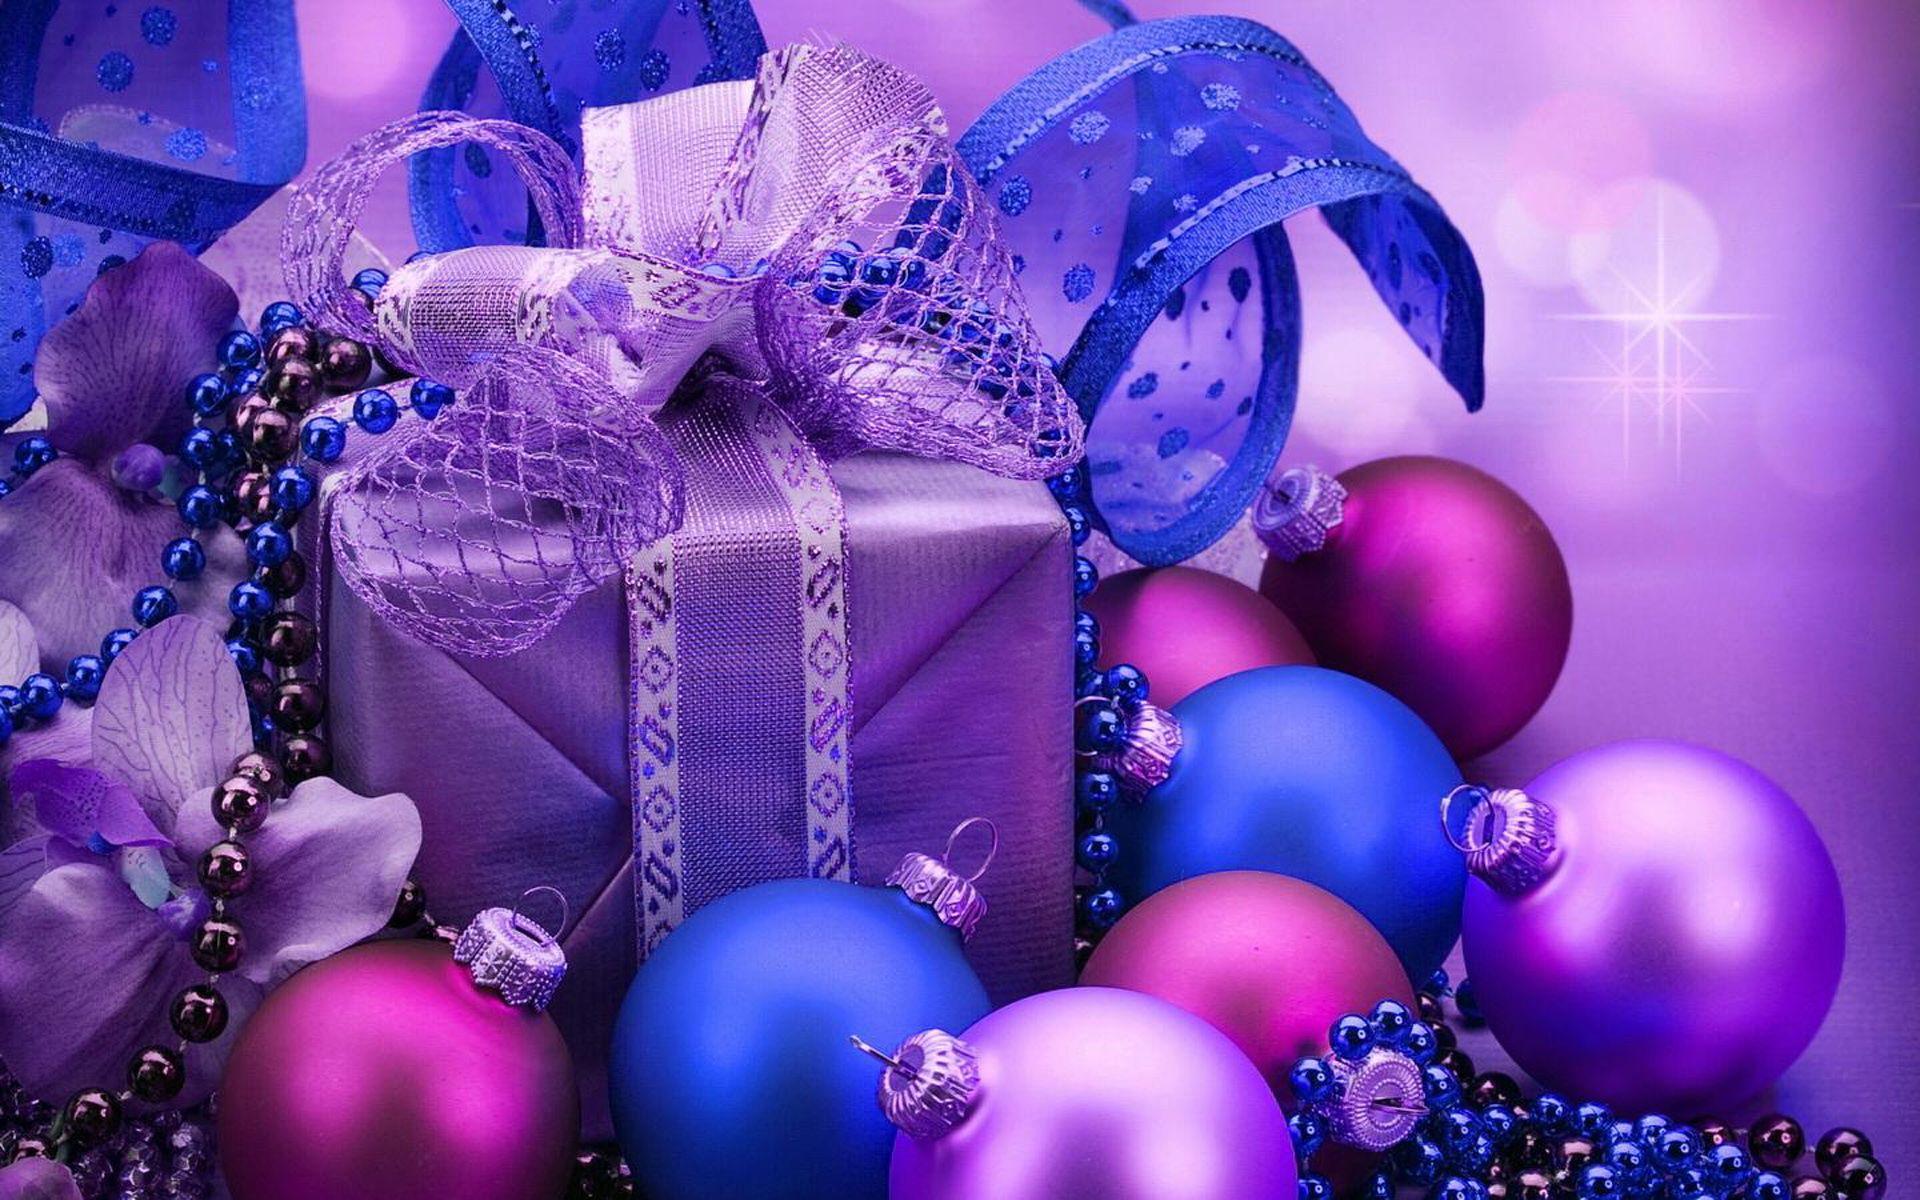 Purple Christmas Tree Wallpapers Top Free Purple Christmas Tree